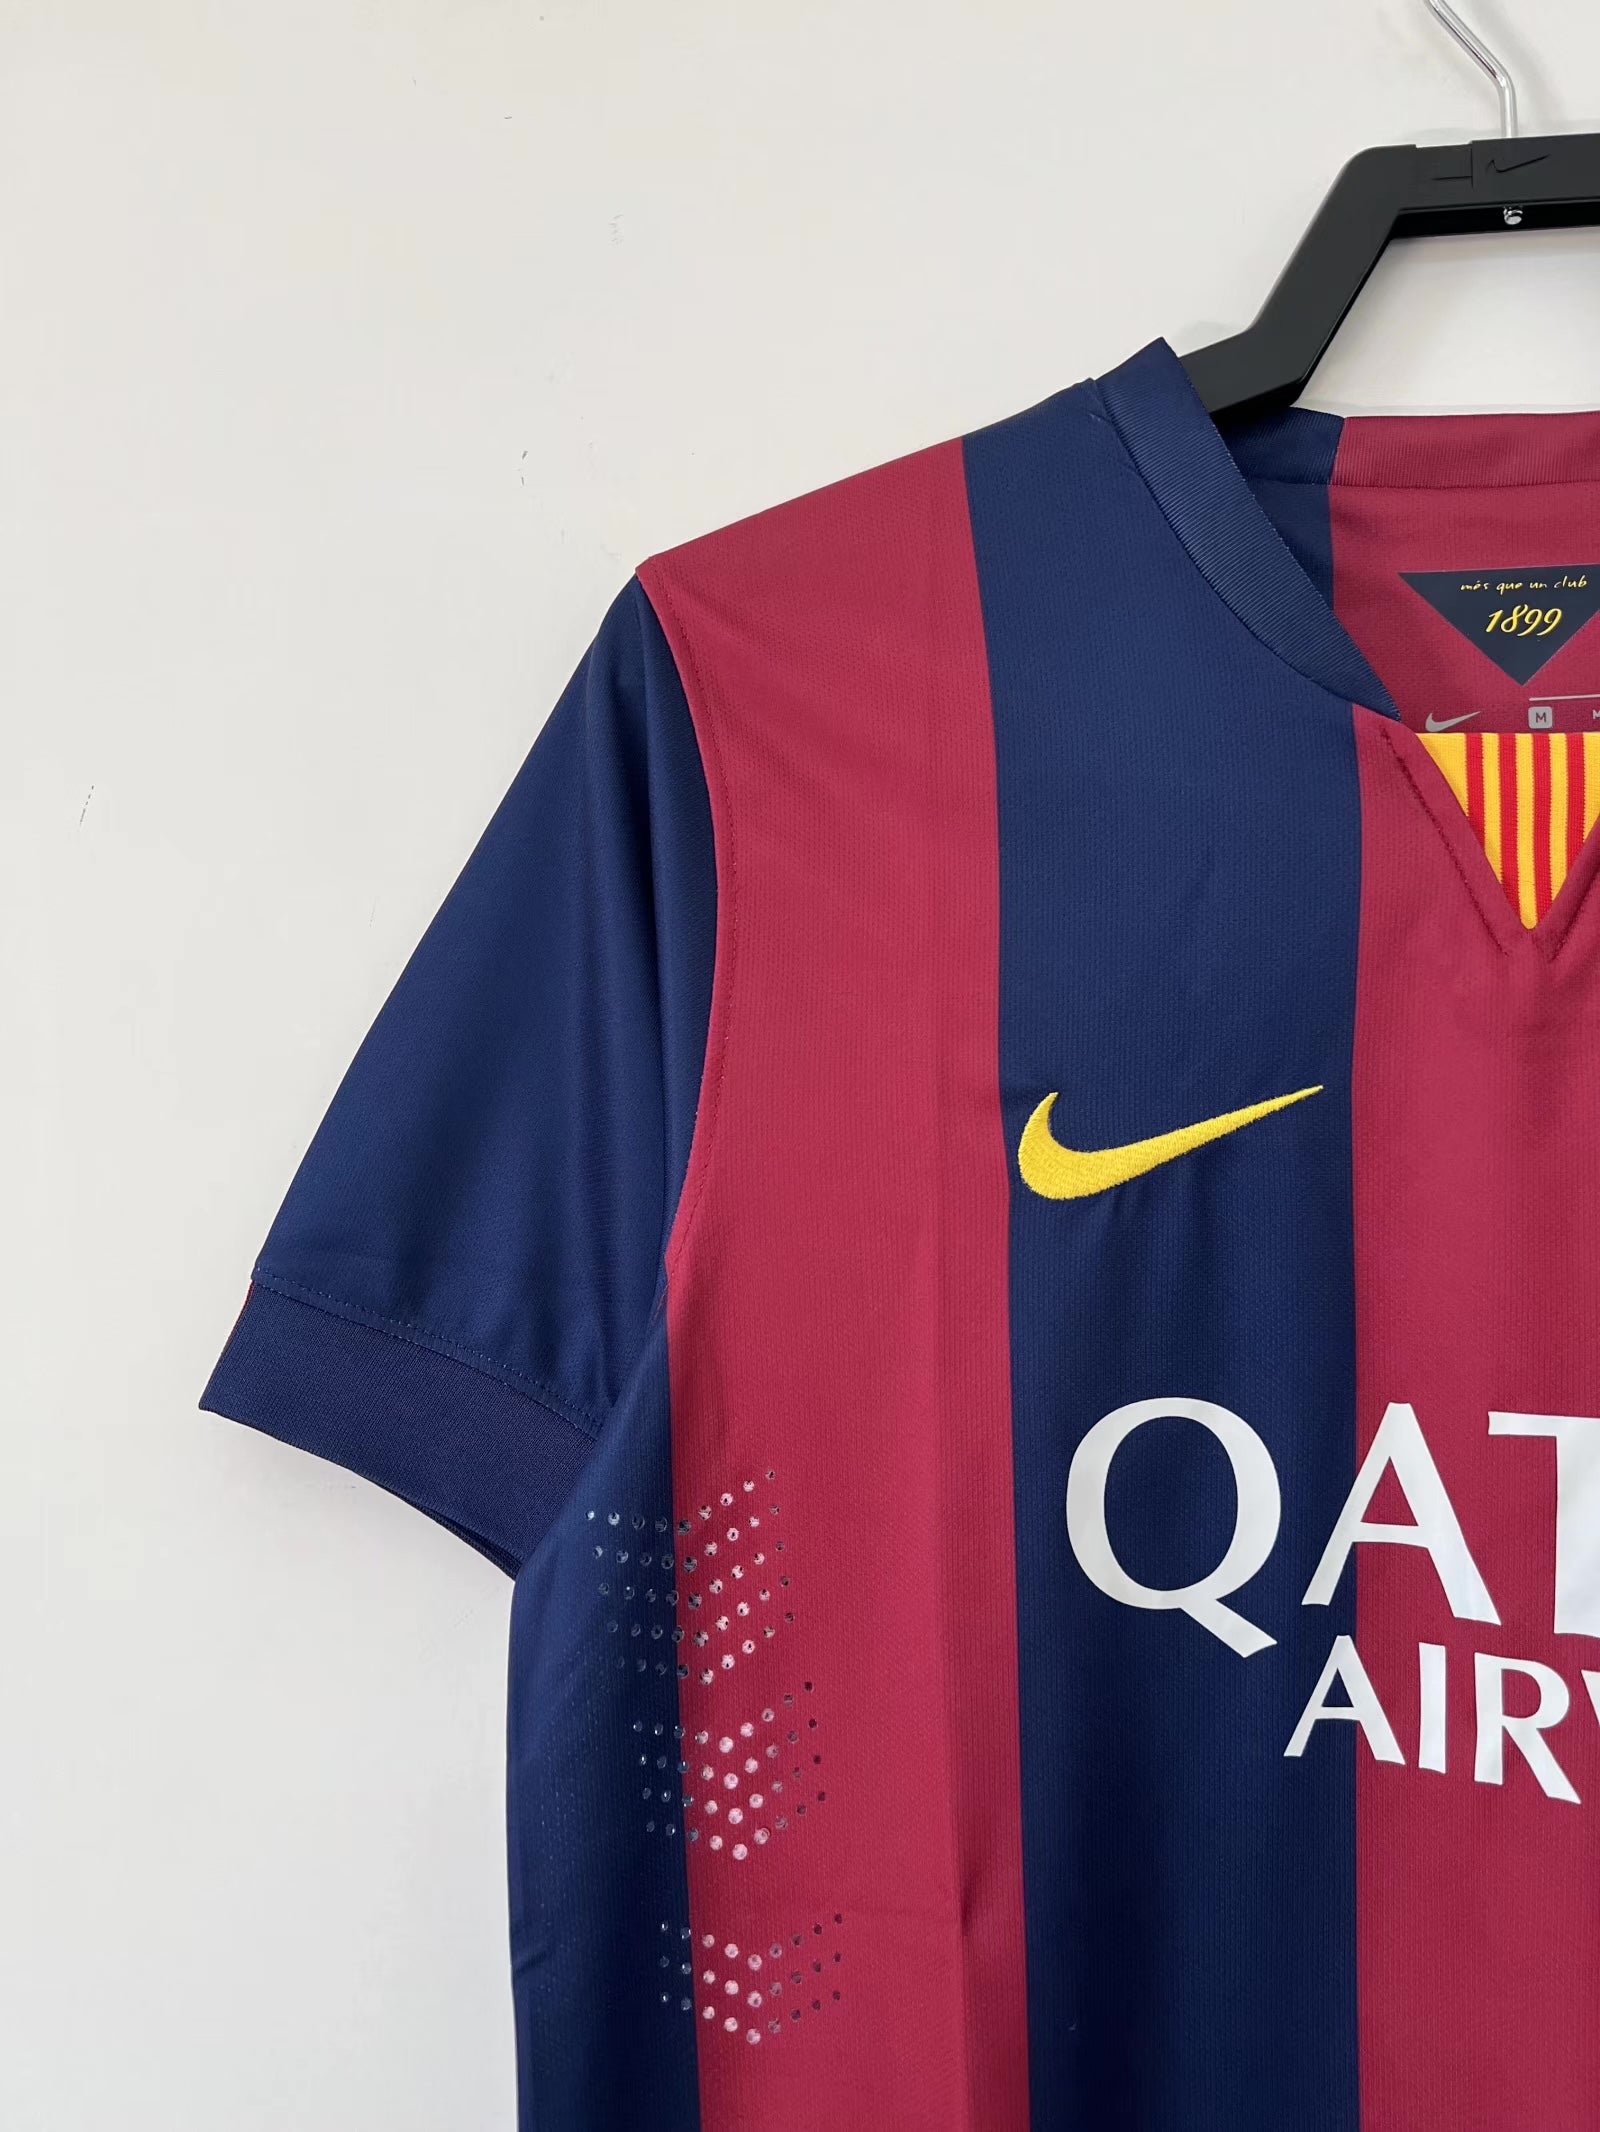 FC Barcelona 14/15 Home Kit – The Football Heritage